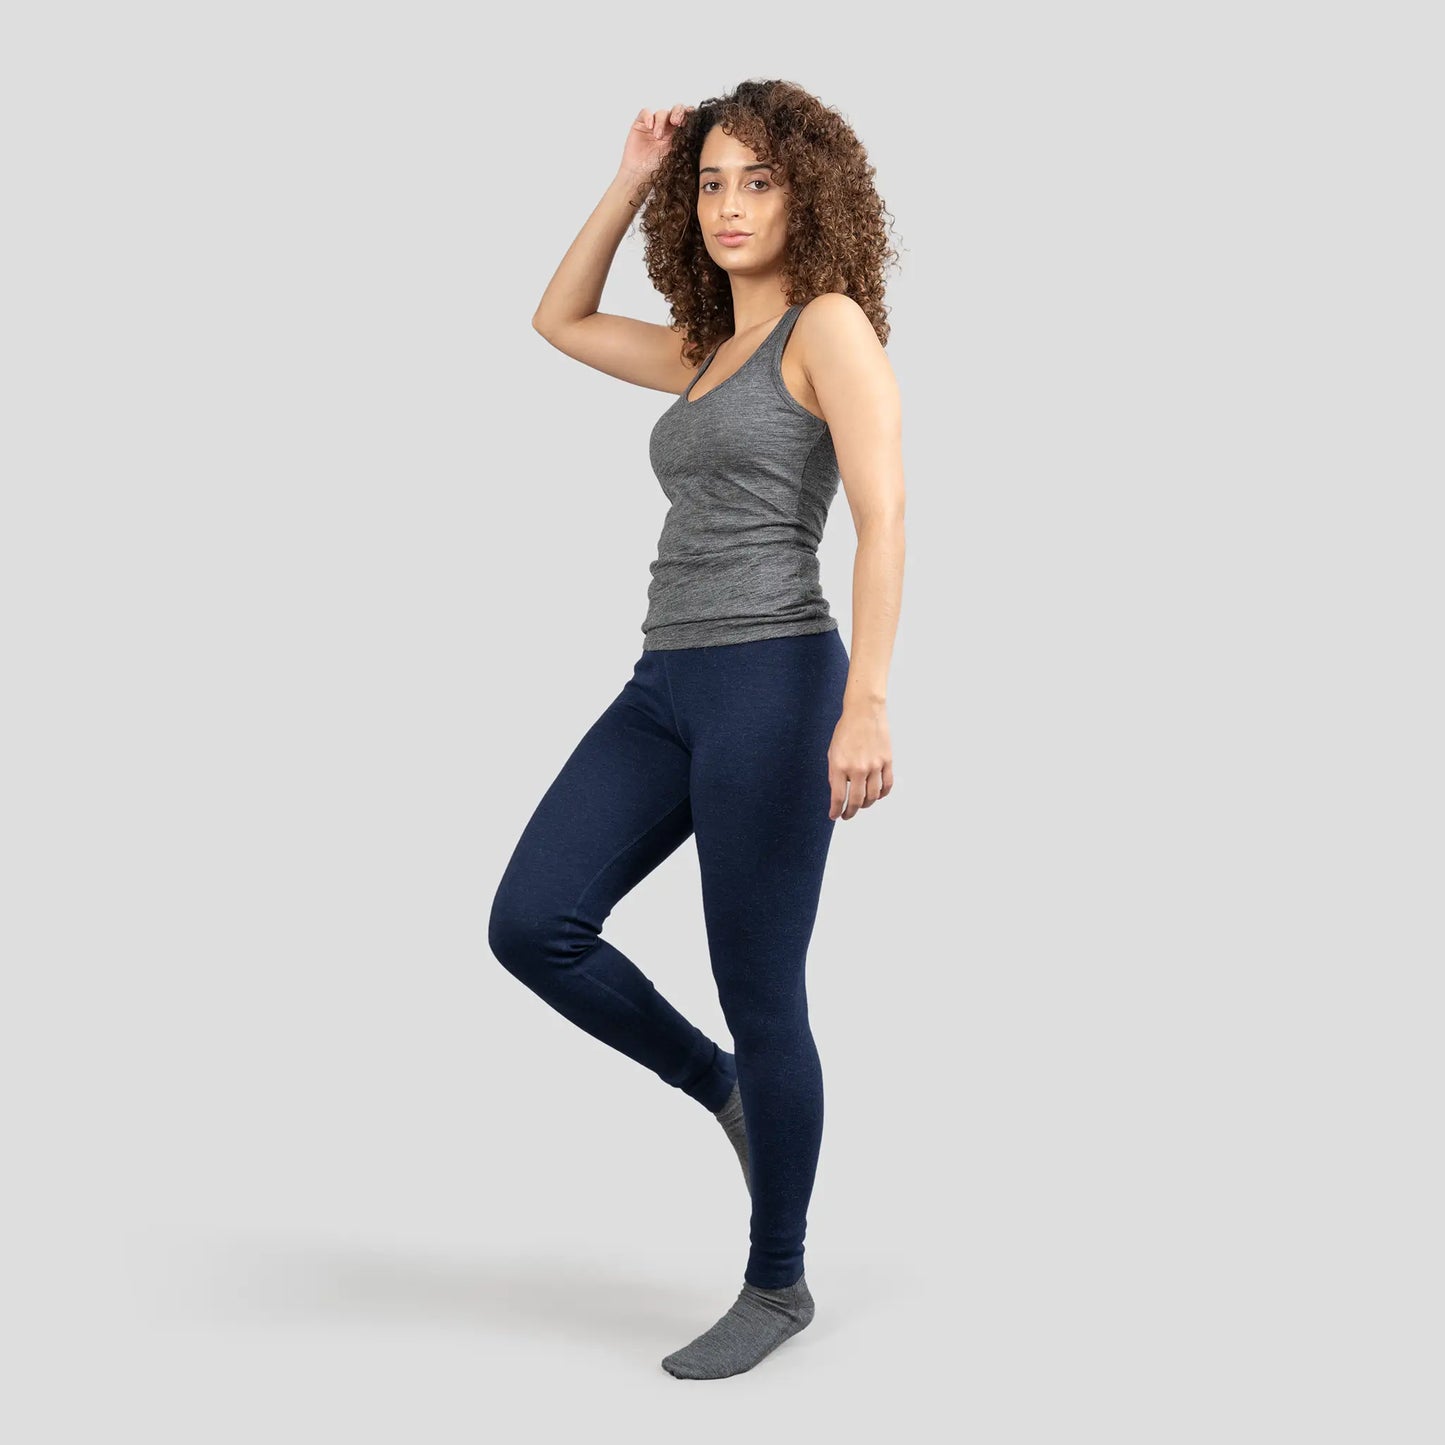 womens temperature regulate leggings lightweight color navy blue